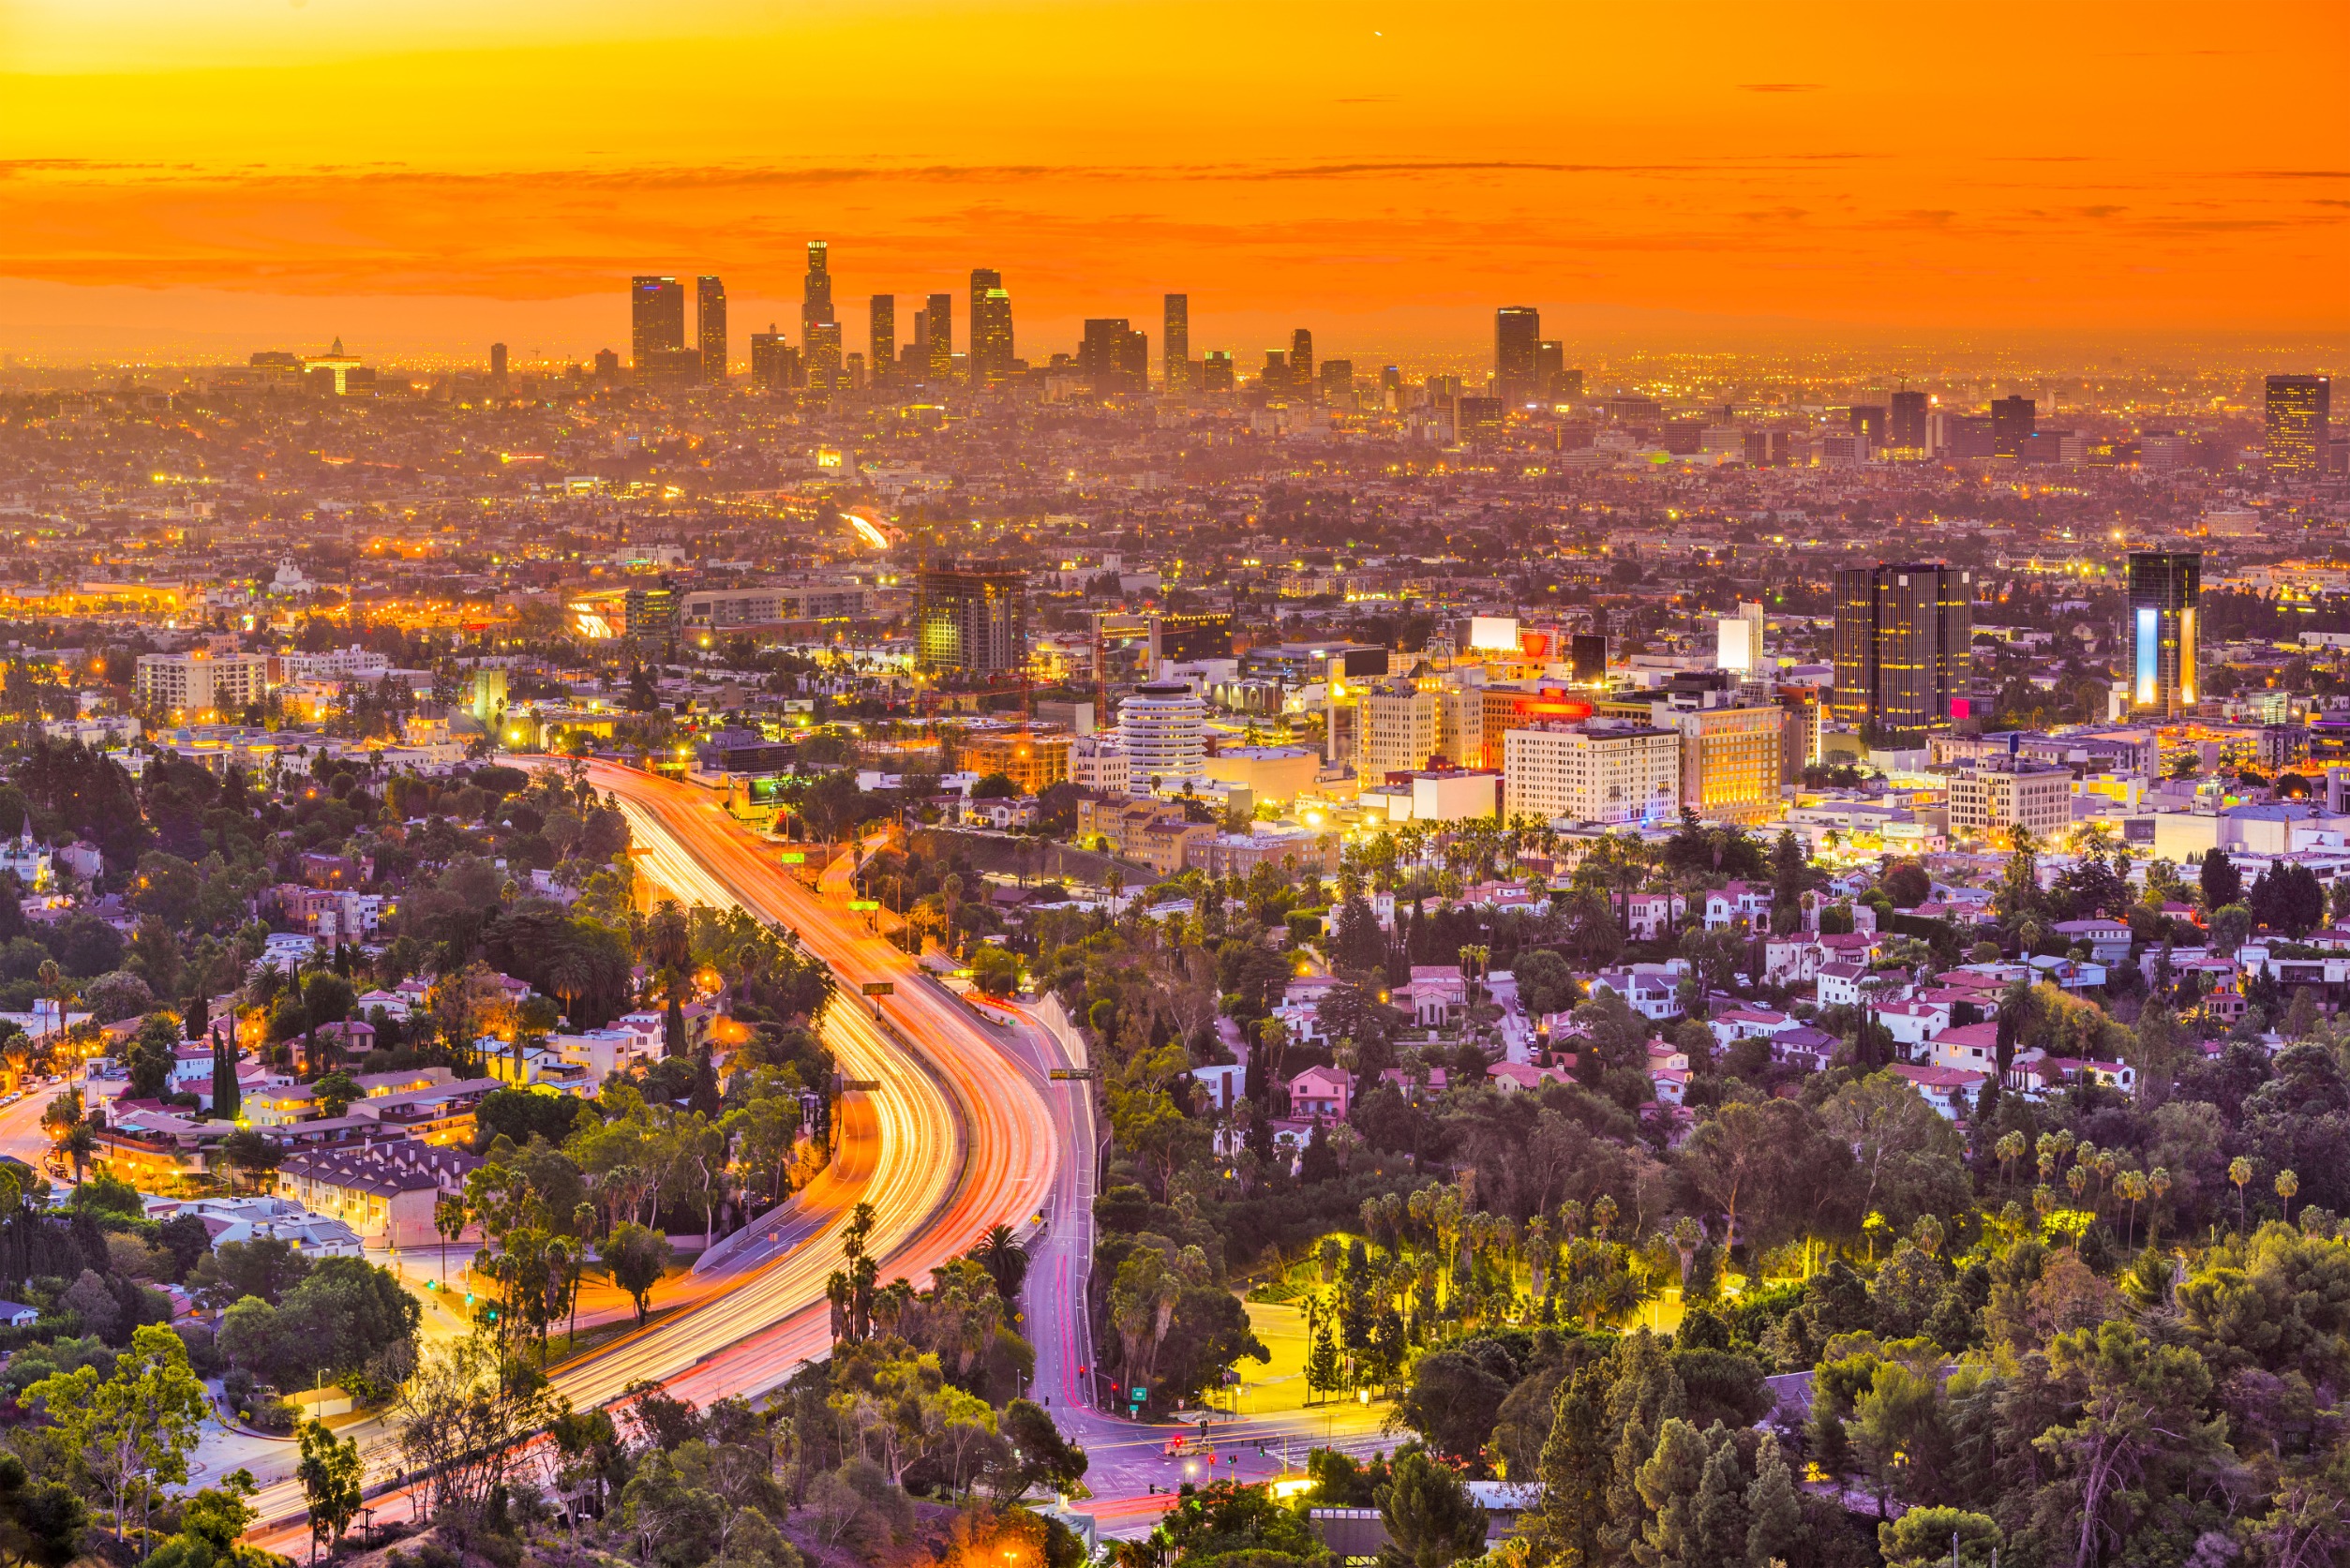 Los Angeles at Night Aerial Image